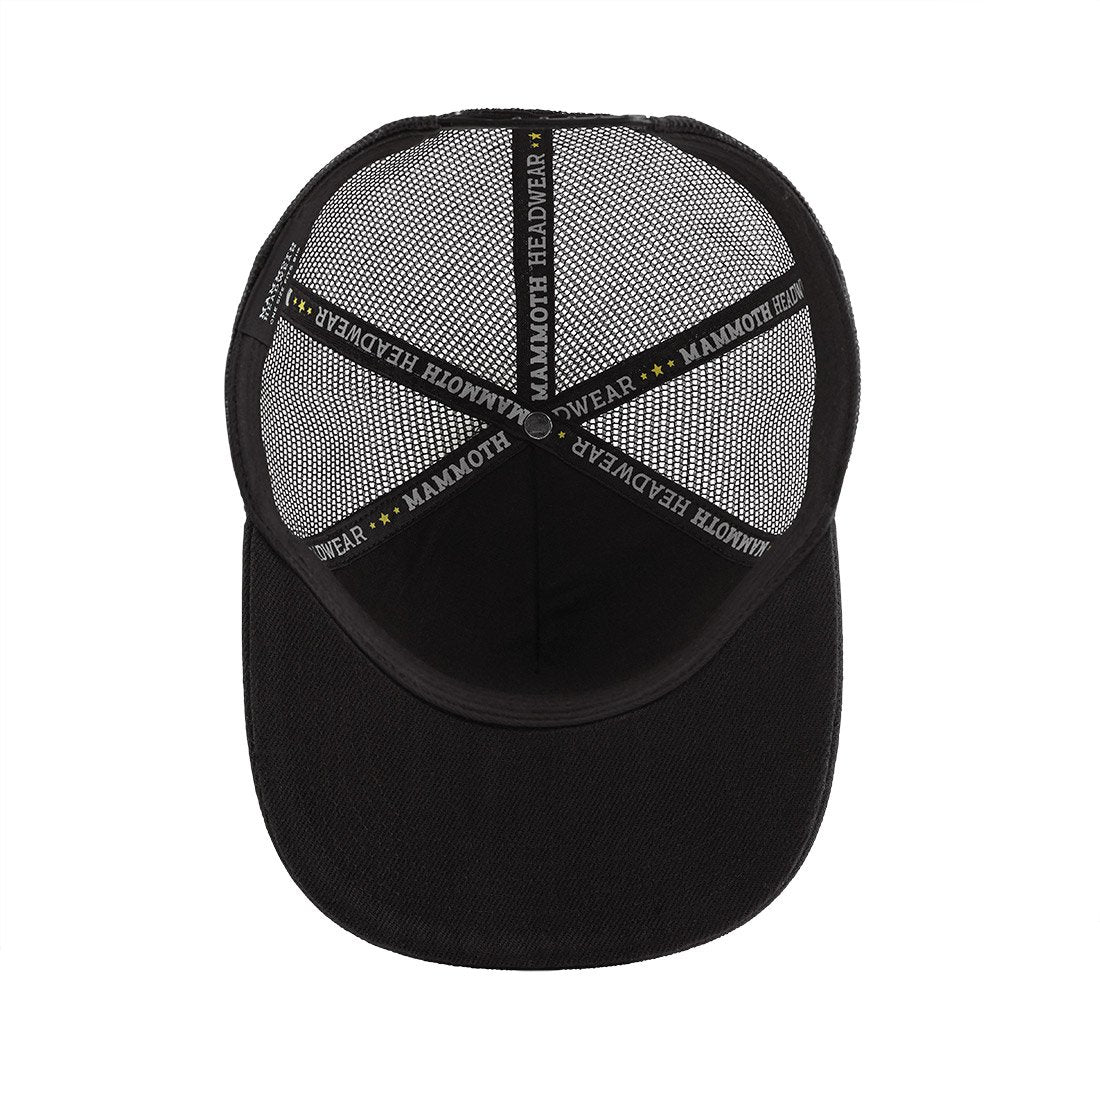 Black Blank Trucker Hat - Sleek & Spacious Design - Mammoth Headwear